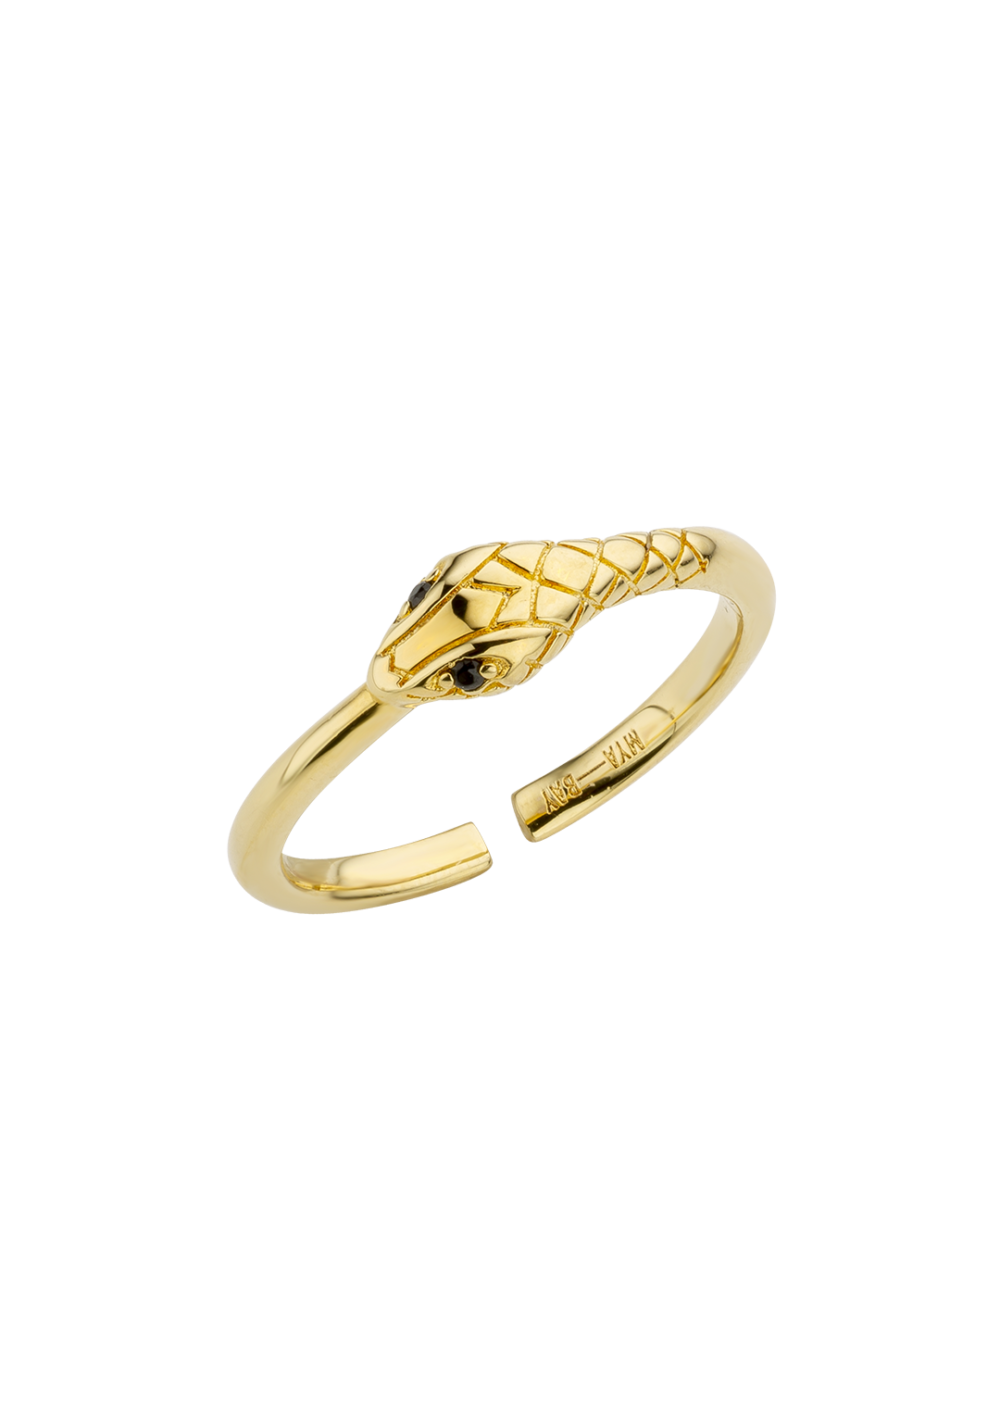 Tendance Ete 2020 Fashion Blog Mode Bijou Jewelry Mya Bay Bague Ring Or Gold Serpent Snake